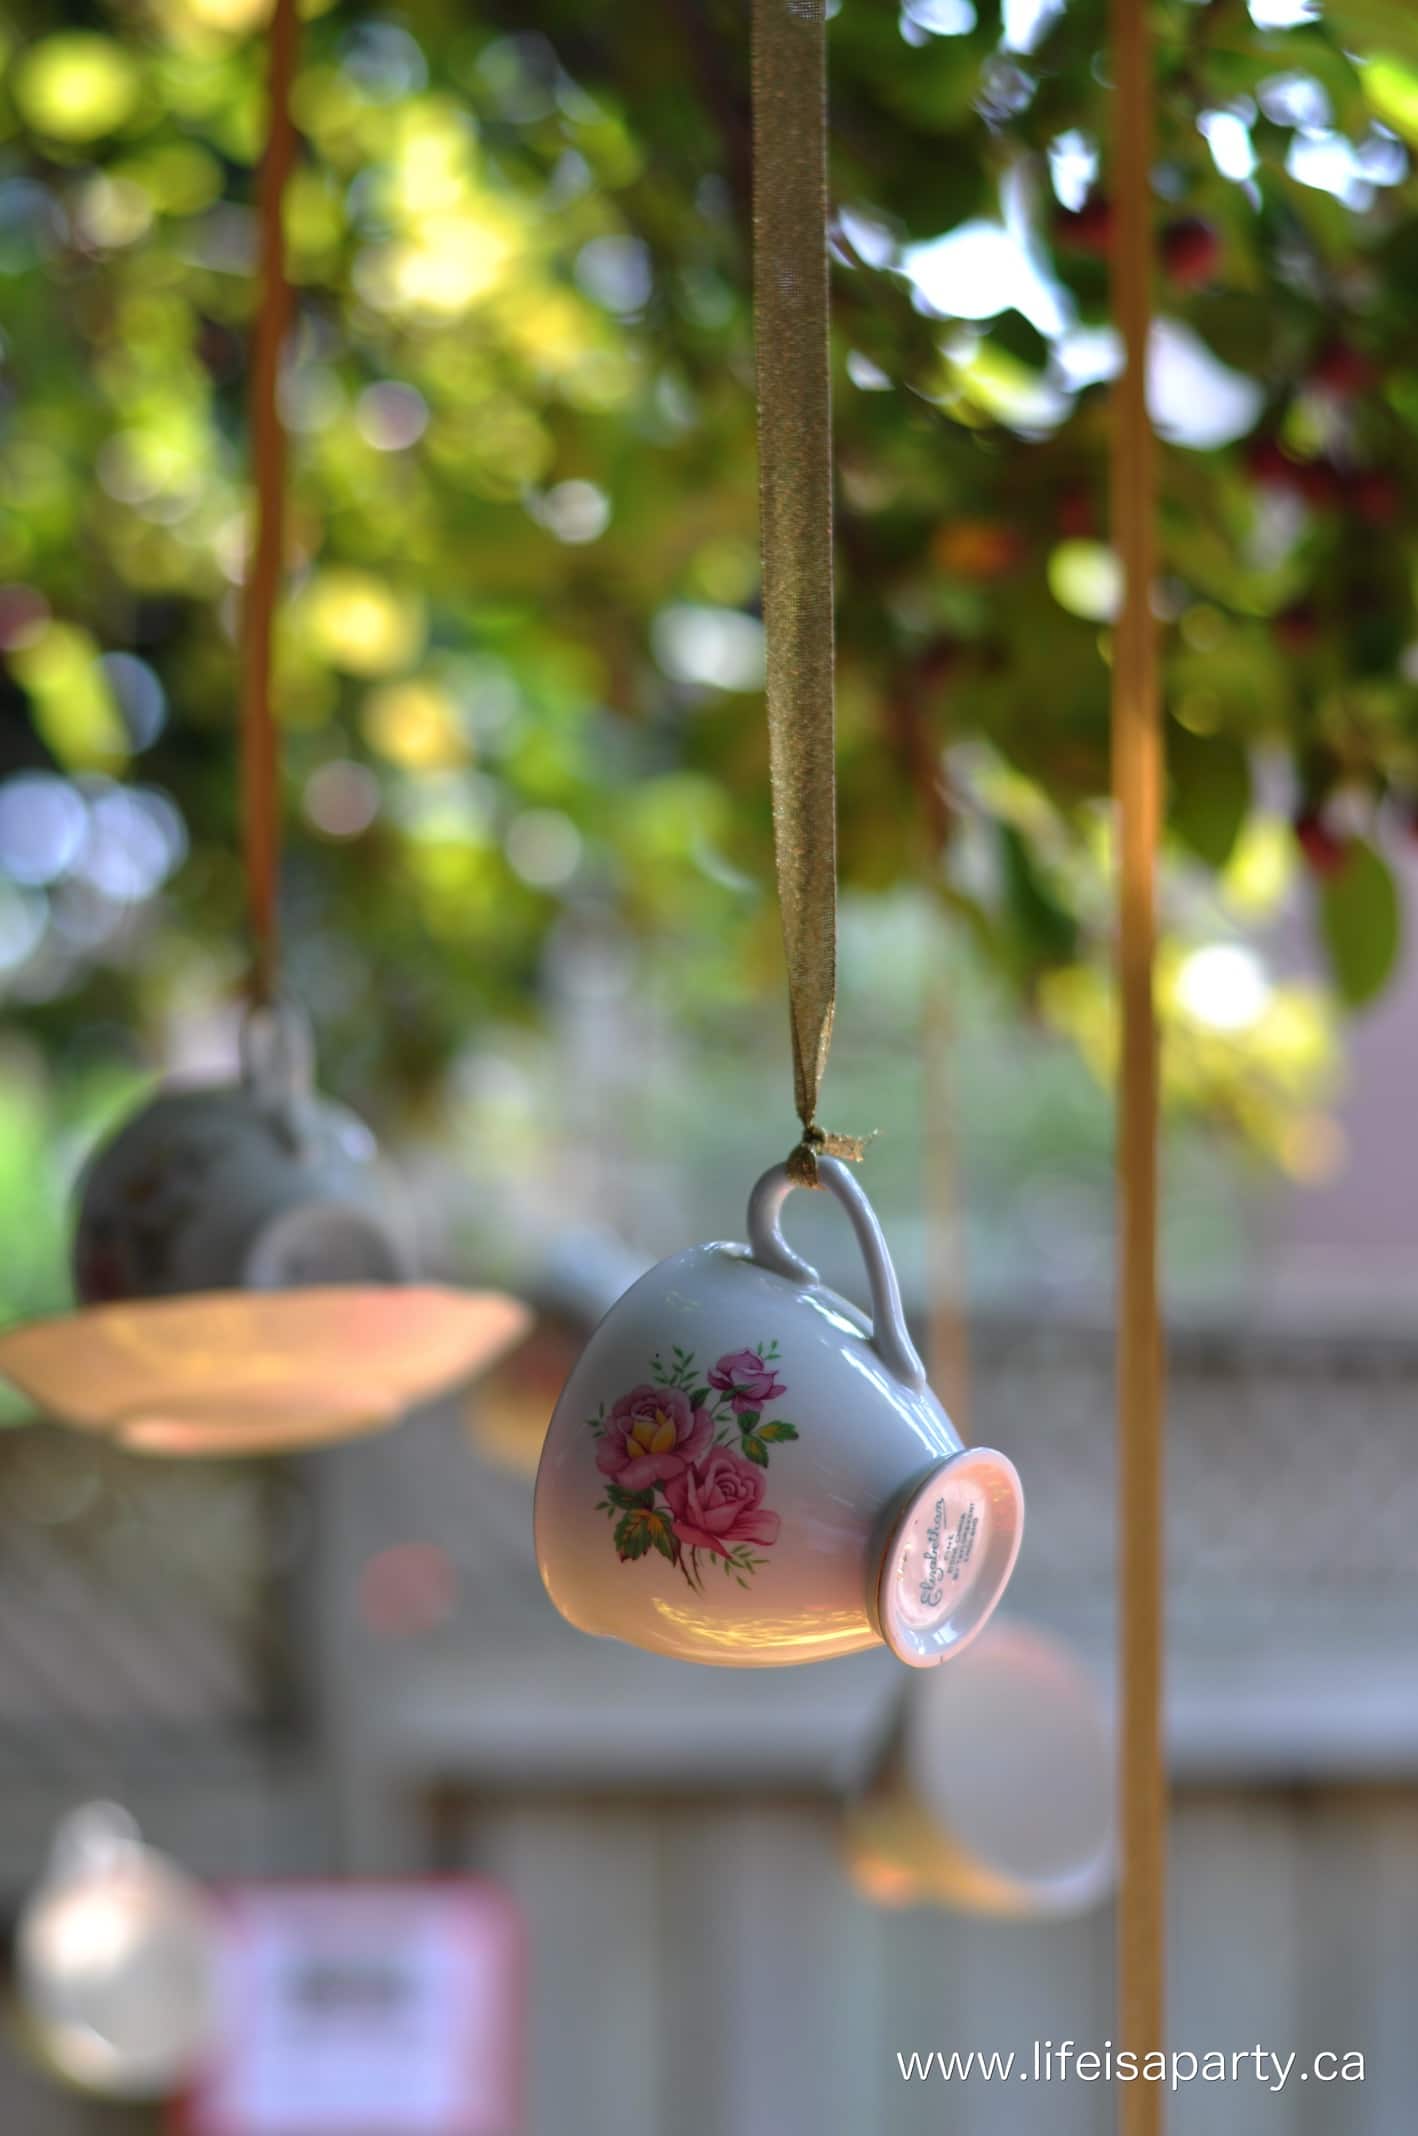 teacup bird feeders hanging in a tree